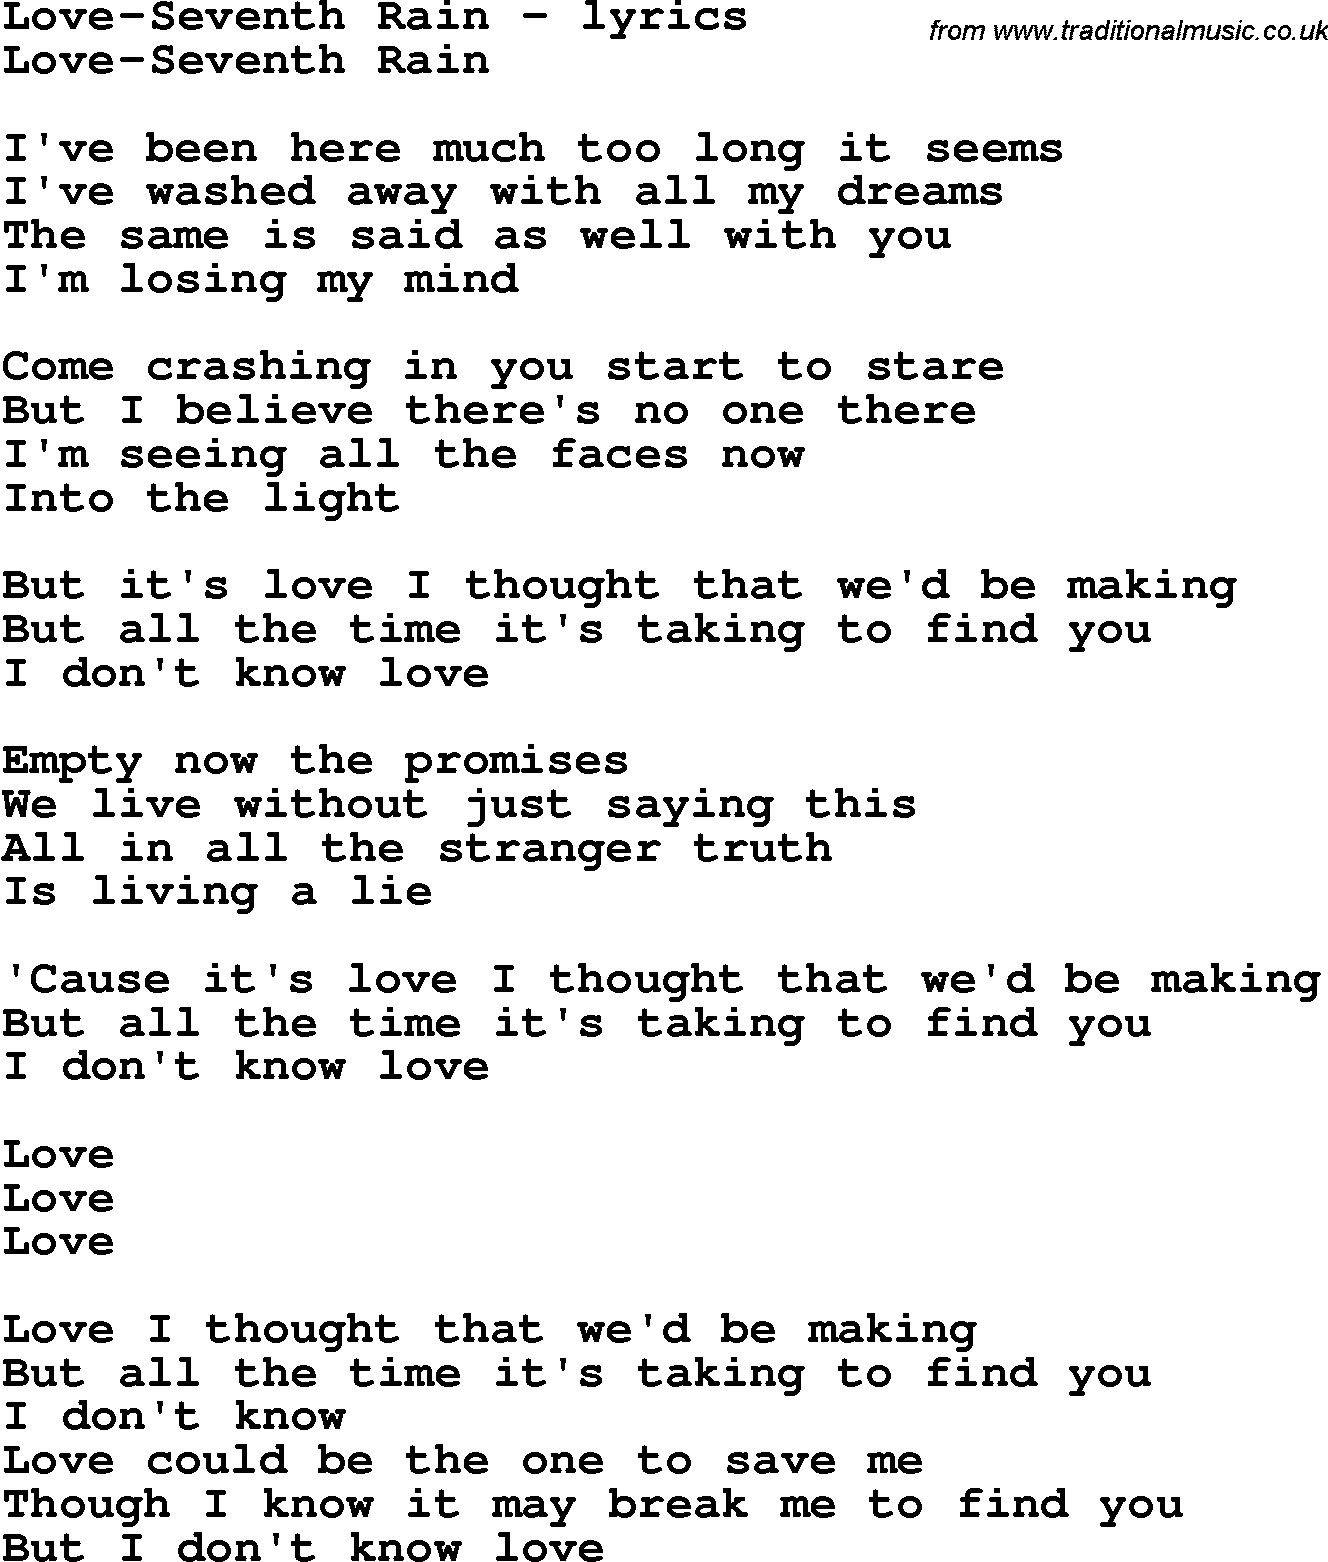 Love Song Lyrics for: Love-Seventh Rain